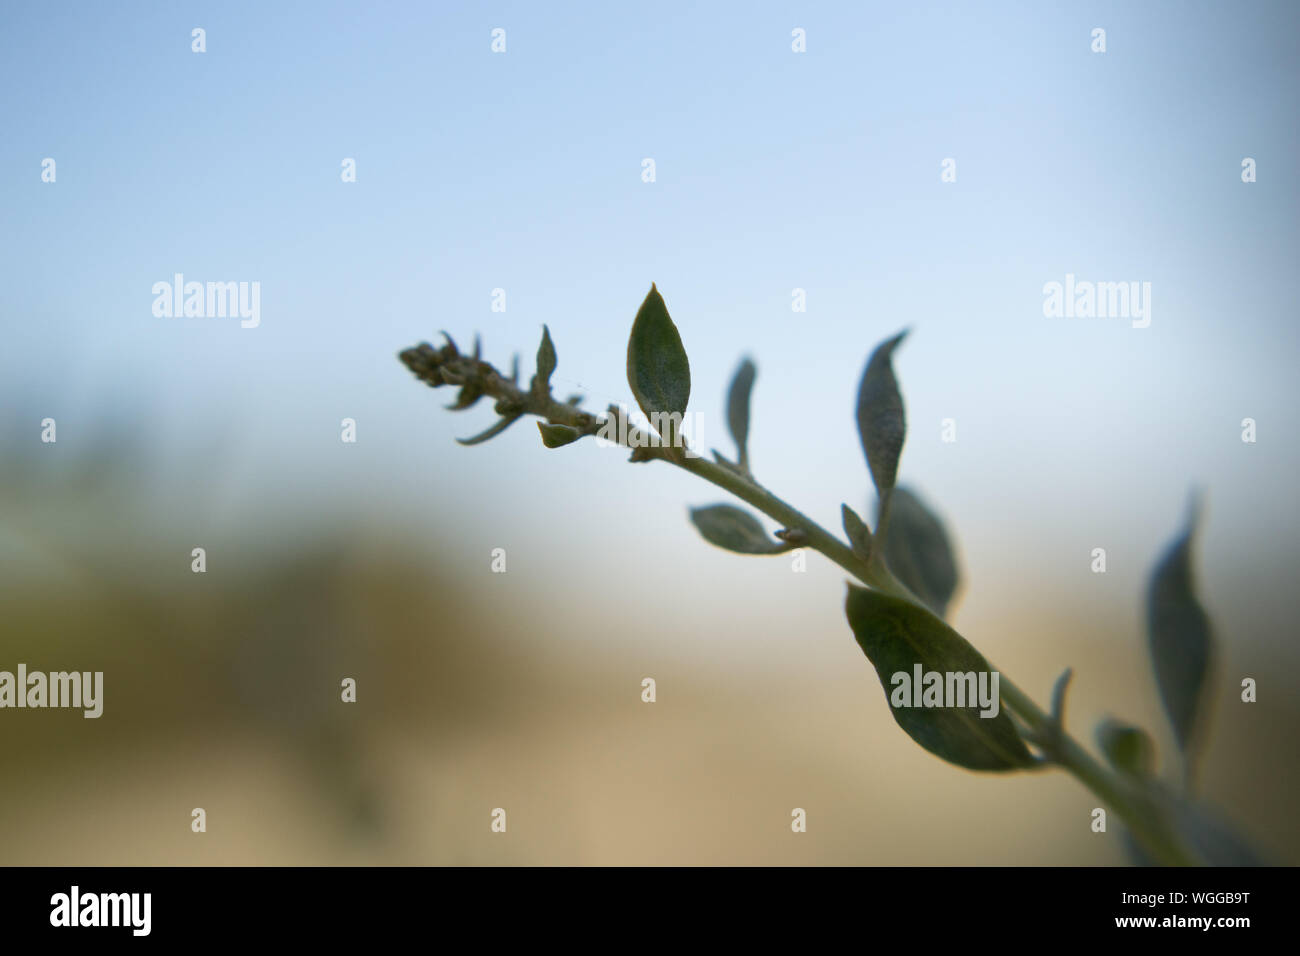 Little plant over bokeh background Stock Photo